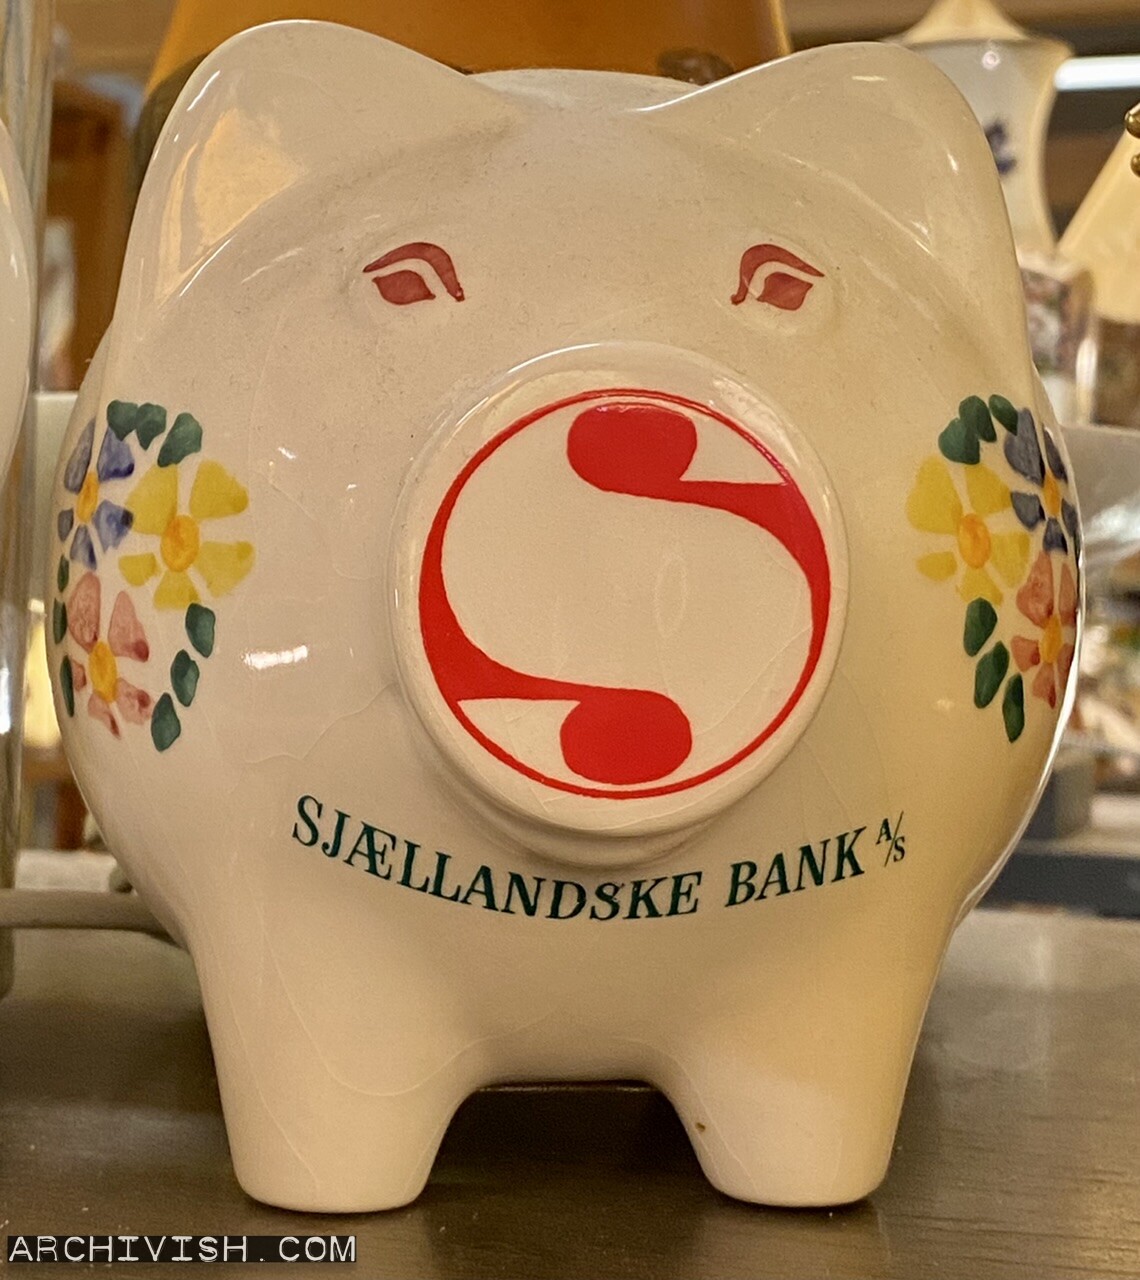 Piggybank from Sjællandske Bank in Denmark